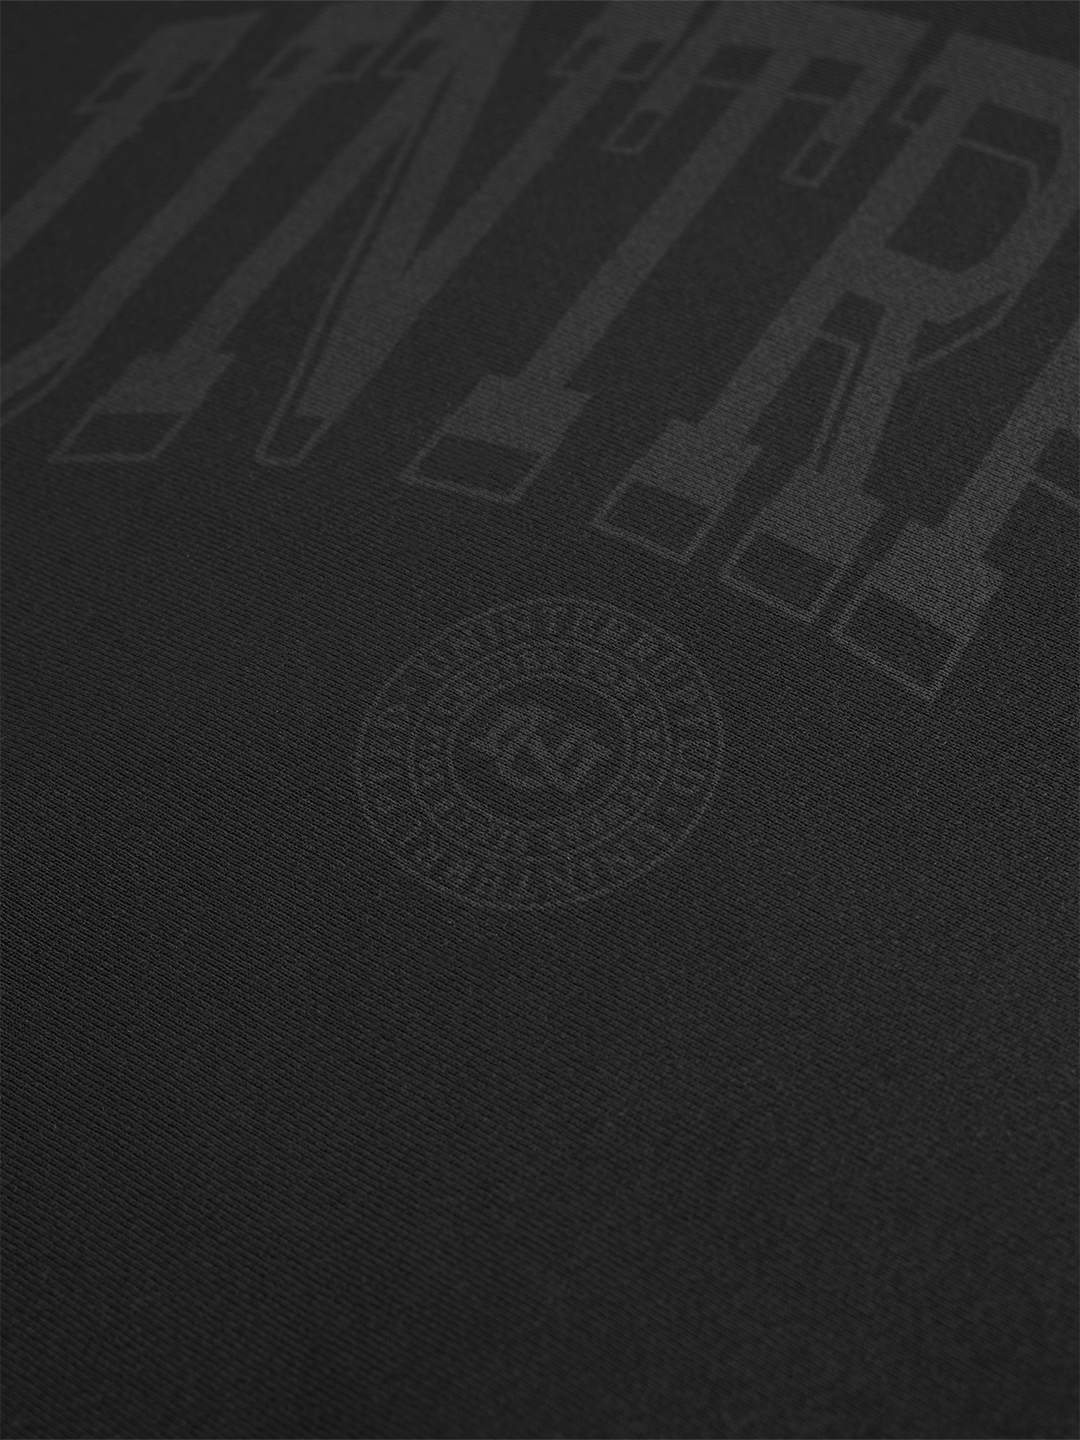 Fundamentals Crewneck Campus Sweatshirt Black - Detail